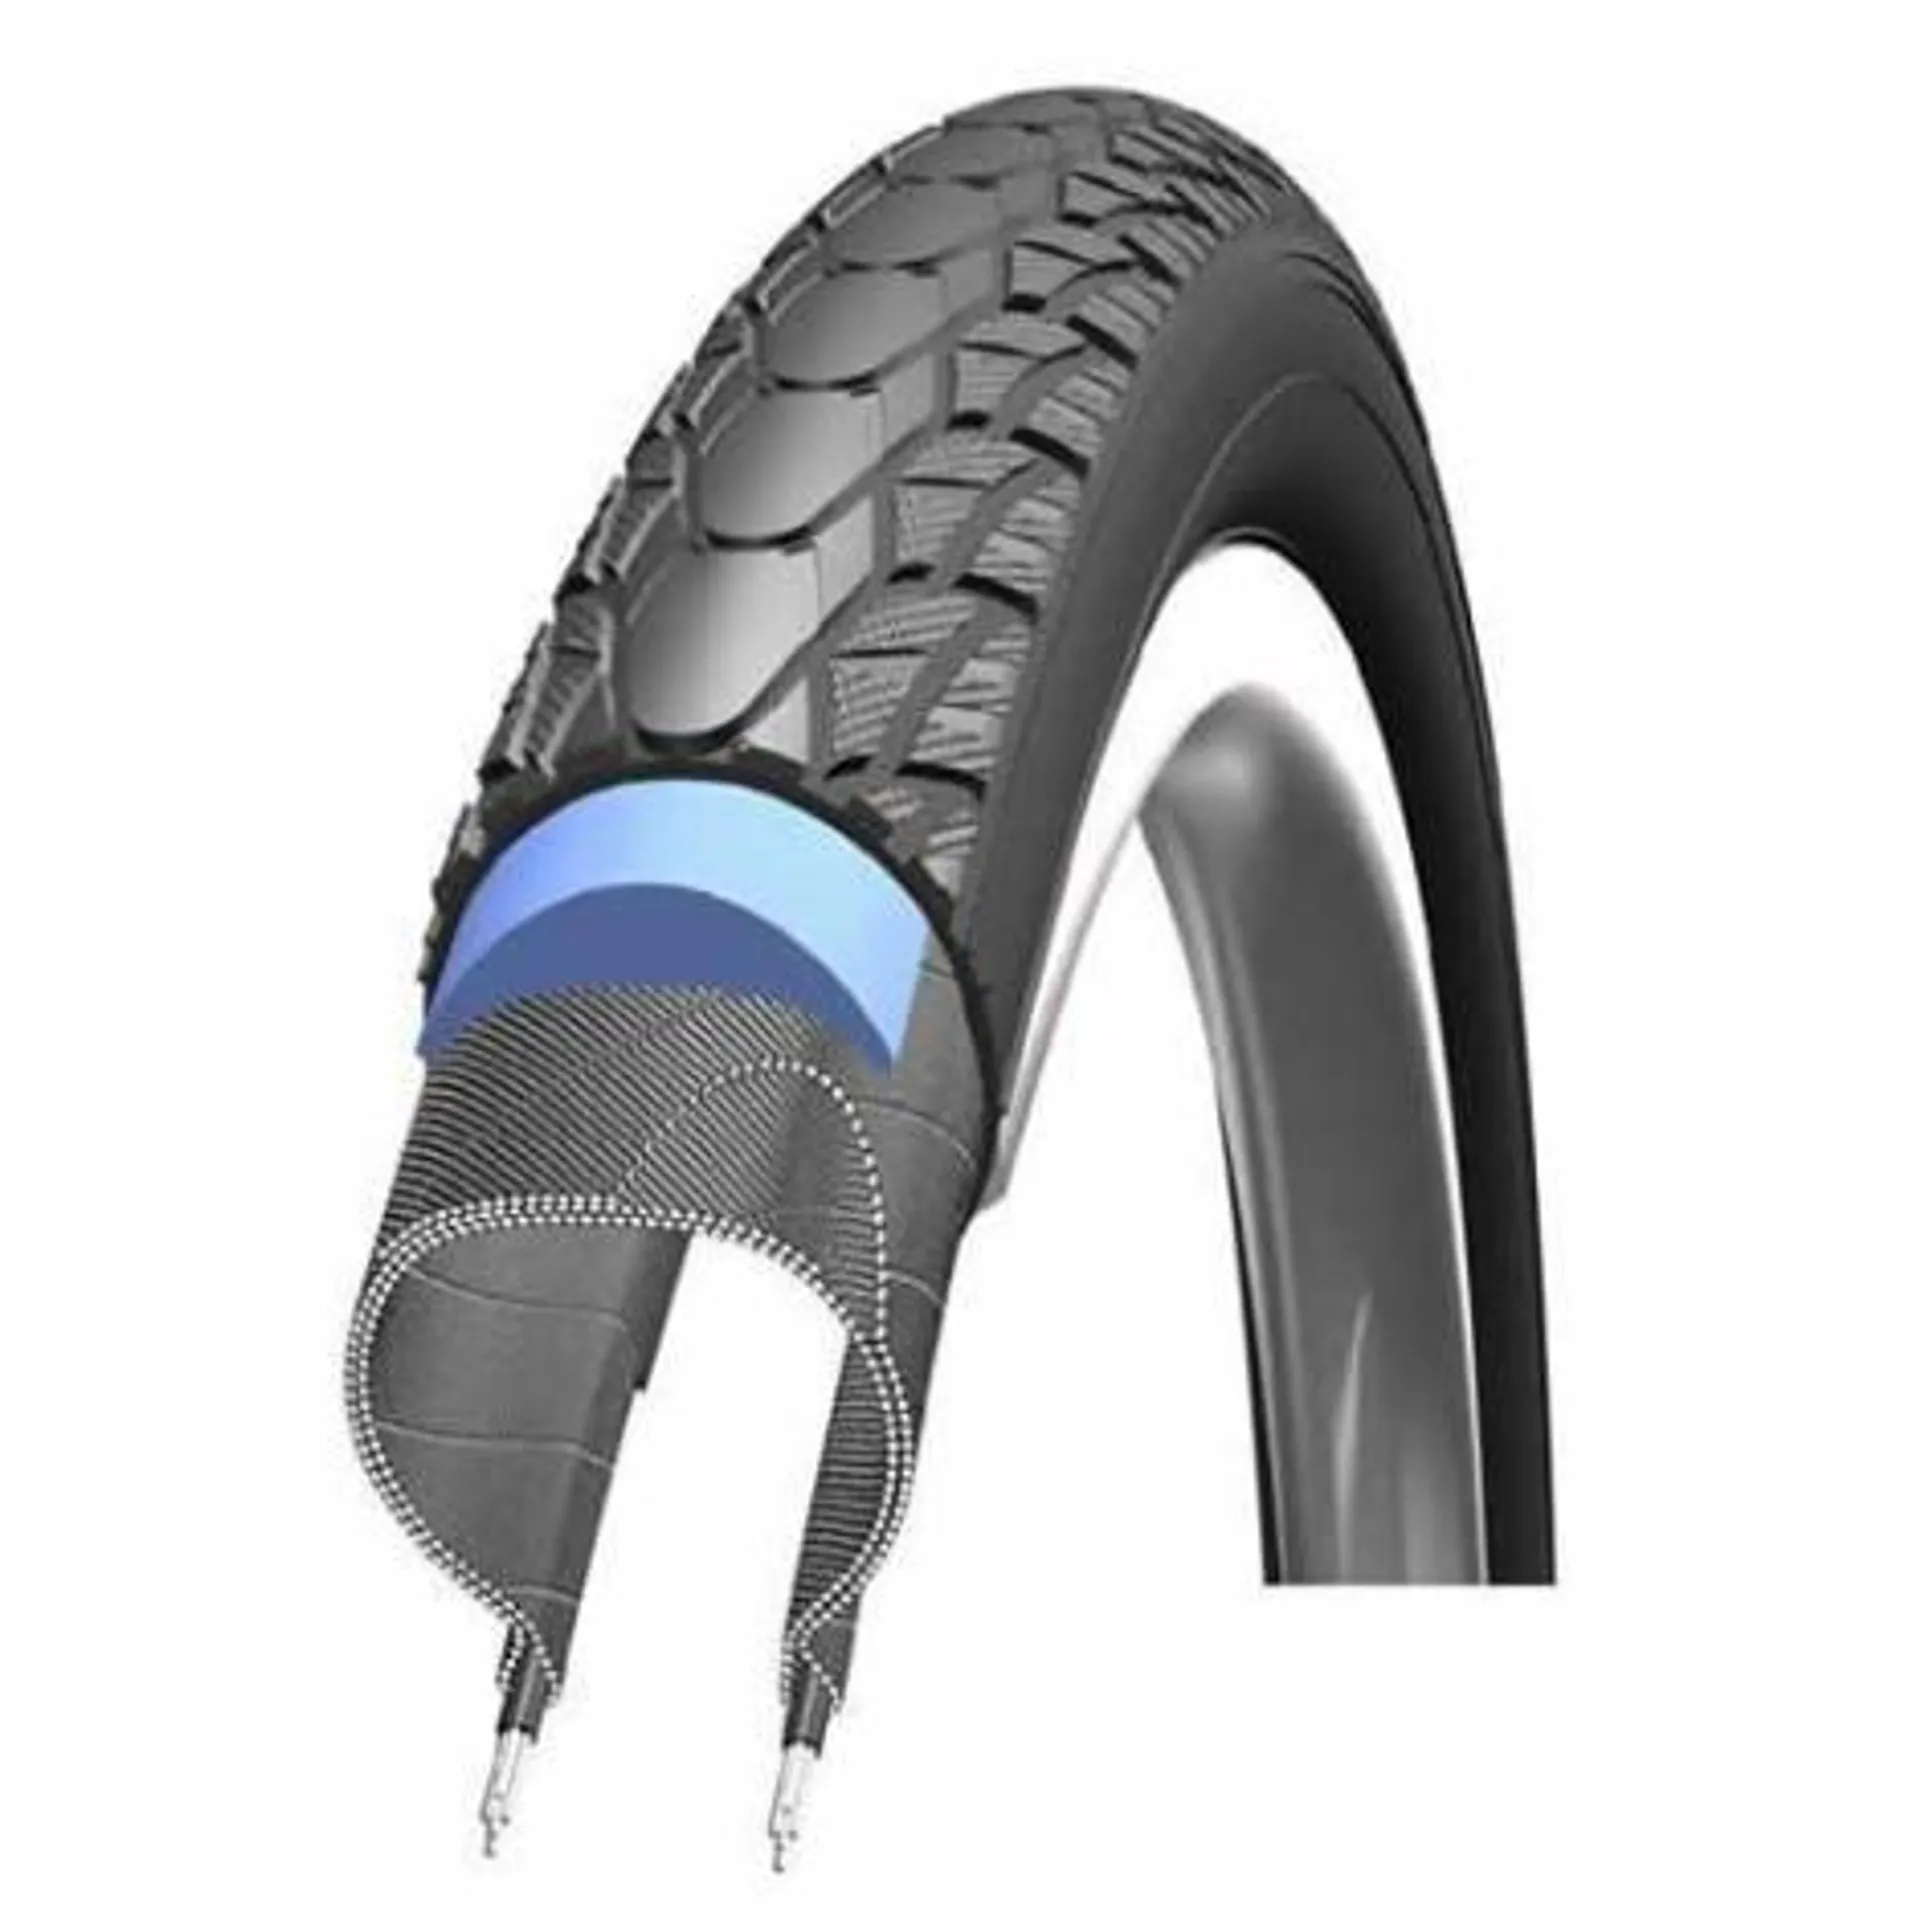 Schwalbe Marathon Plus Smartguard Rigid Road Tyre - 700c